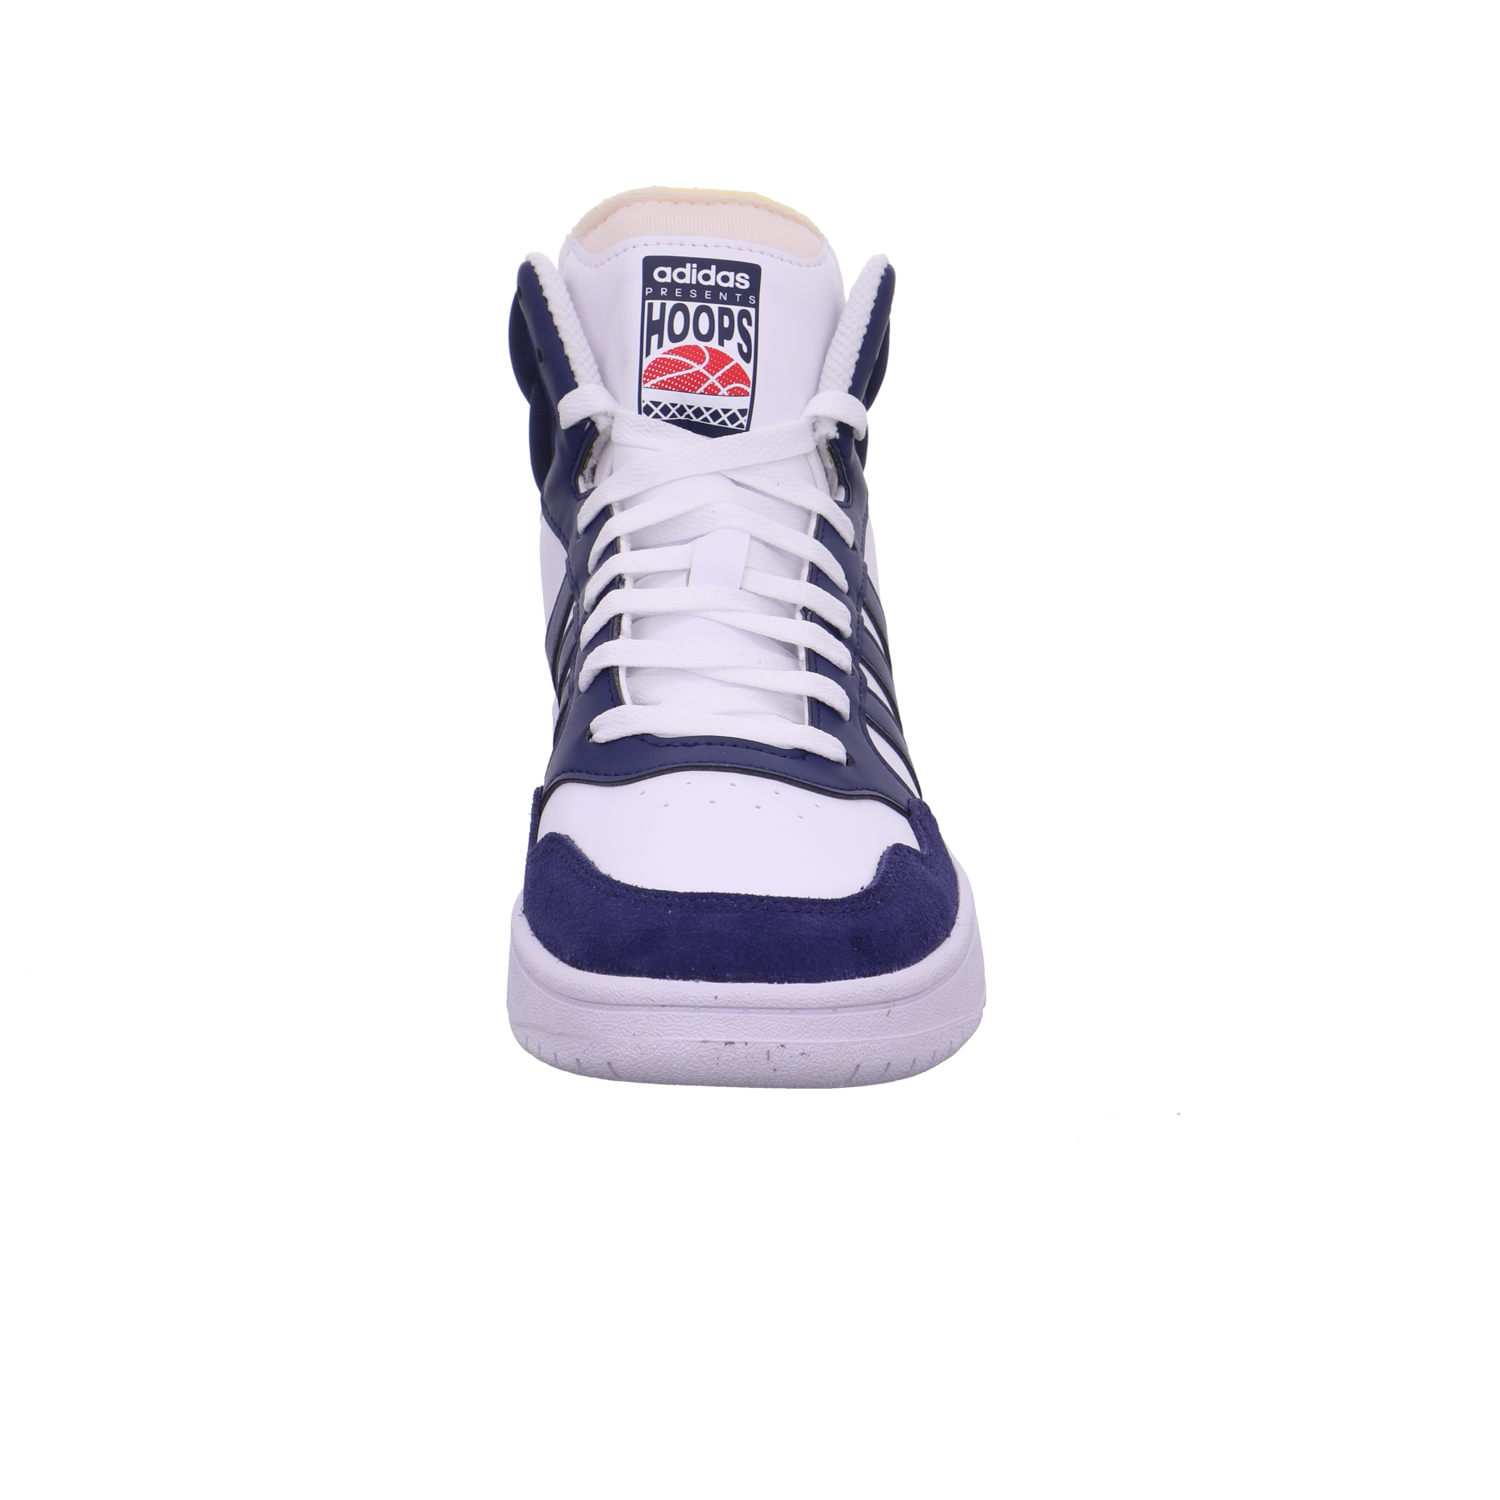 Adidas HOOPS 3.0 MID weiß blau Bild3